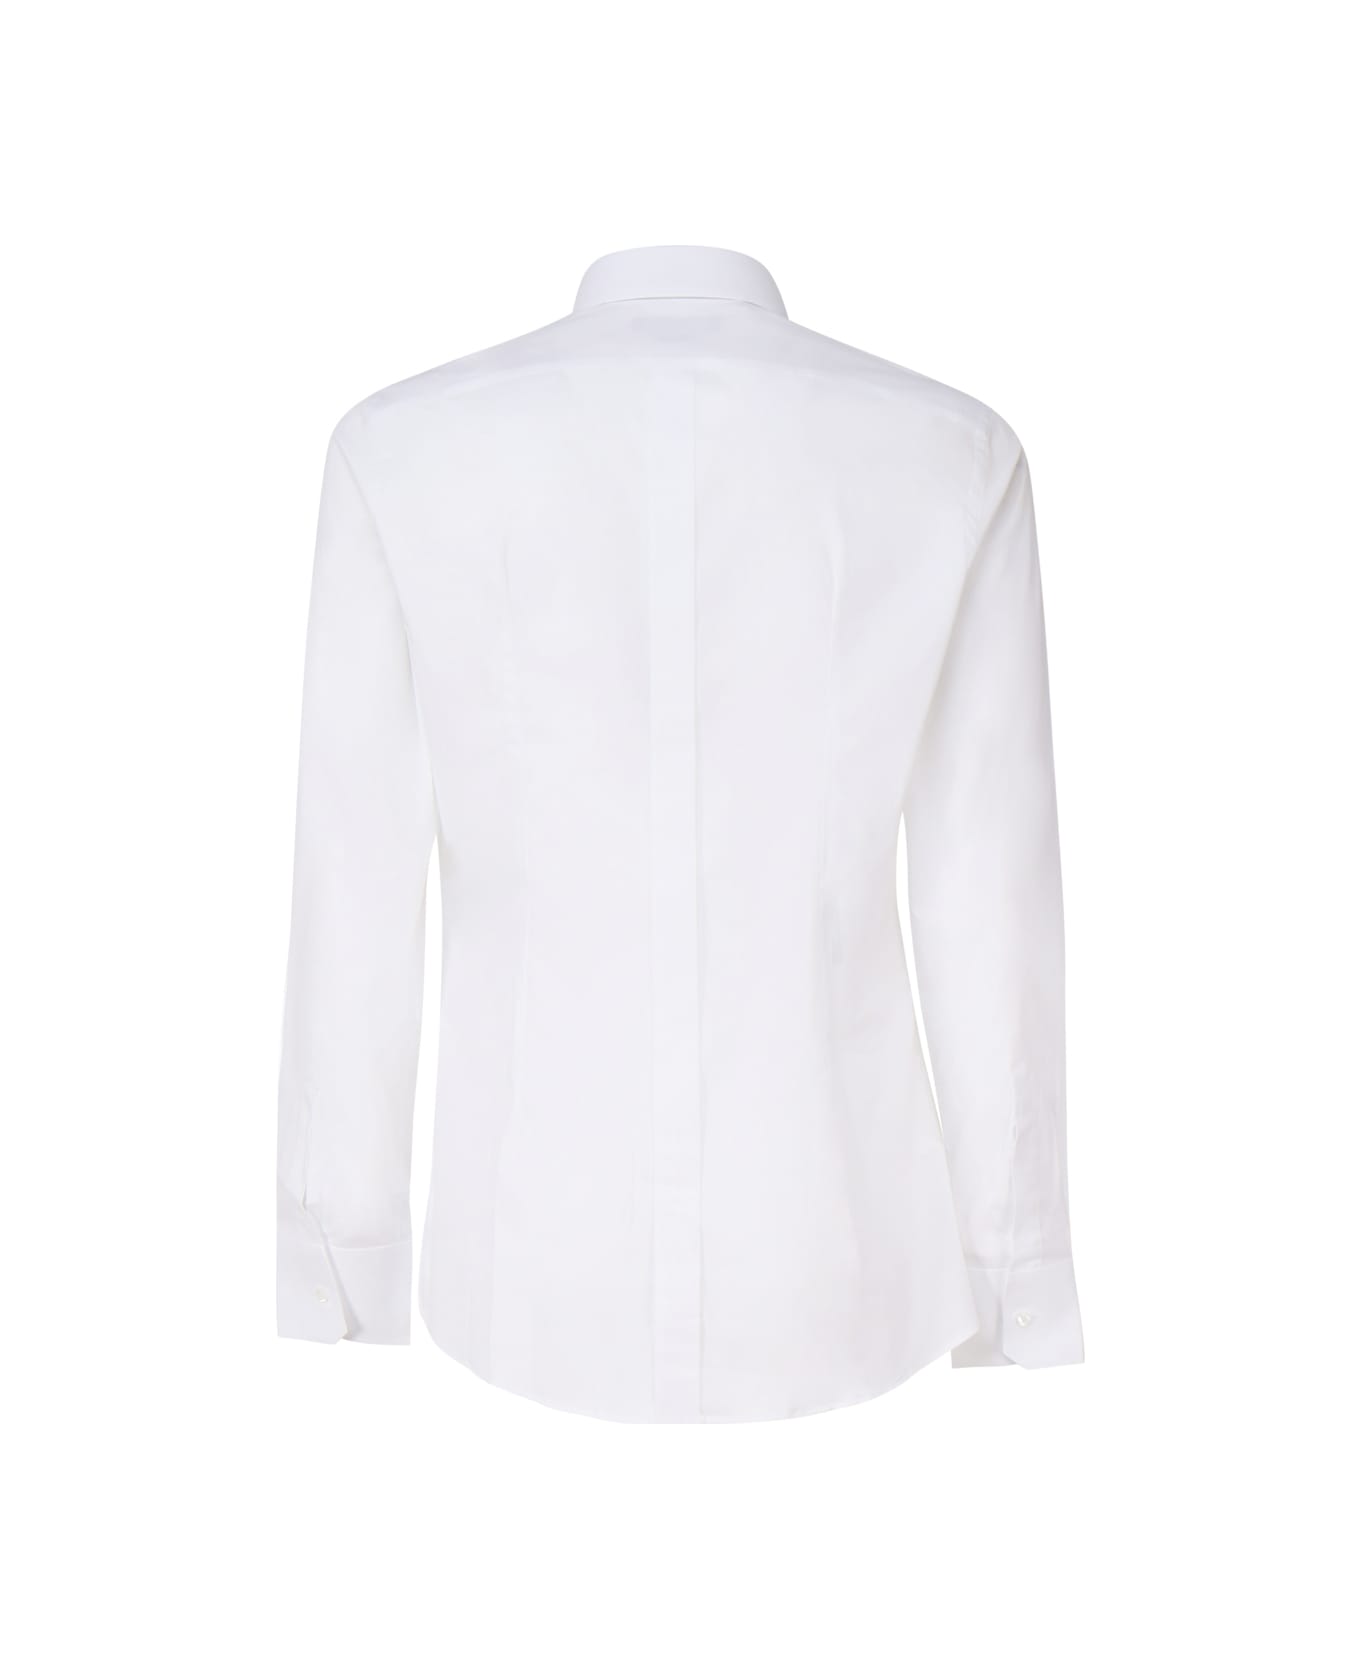 Dolce & Gabbana Shirt Made Of Stretch Cotton Poplin - White